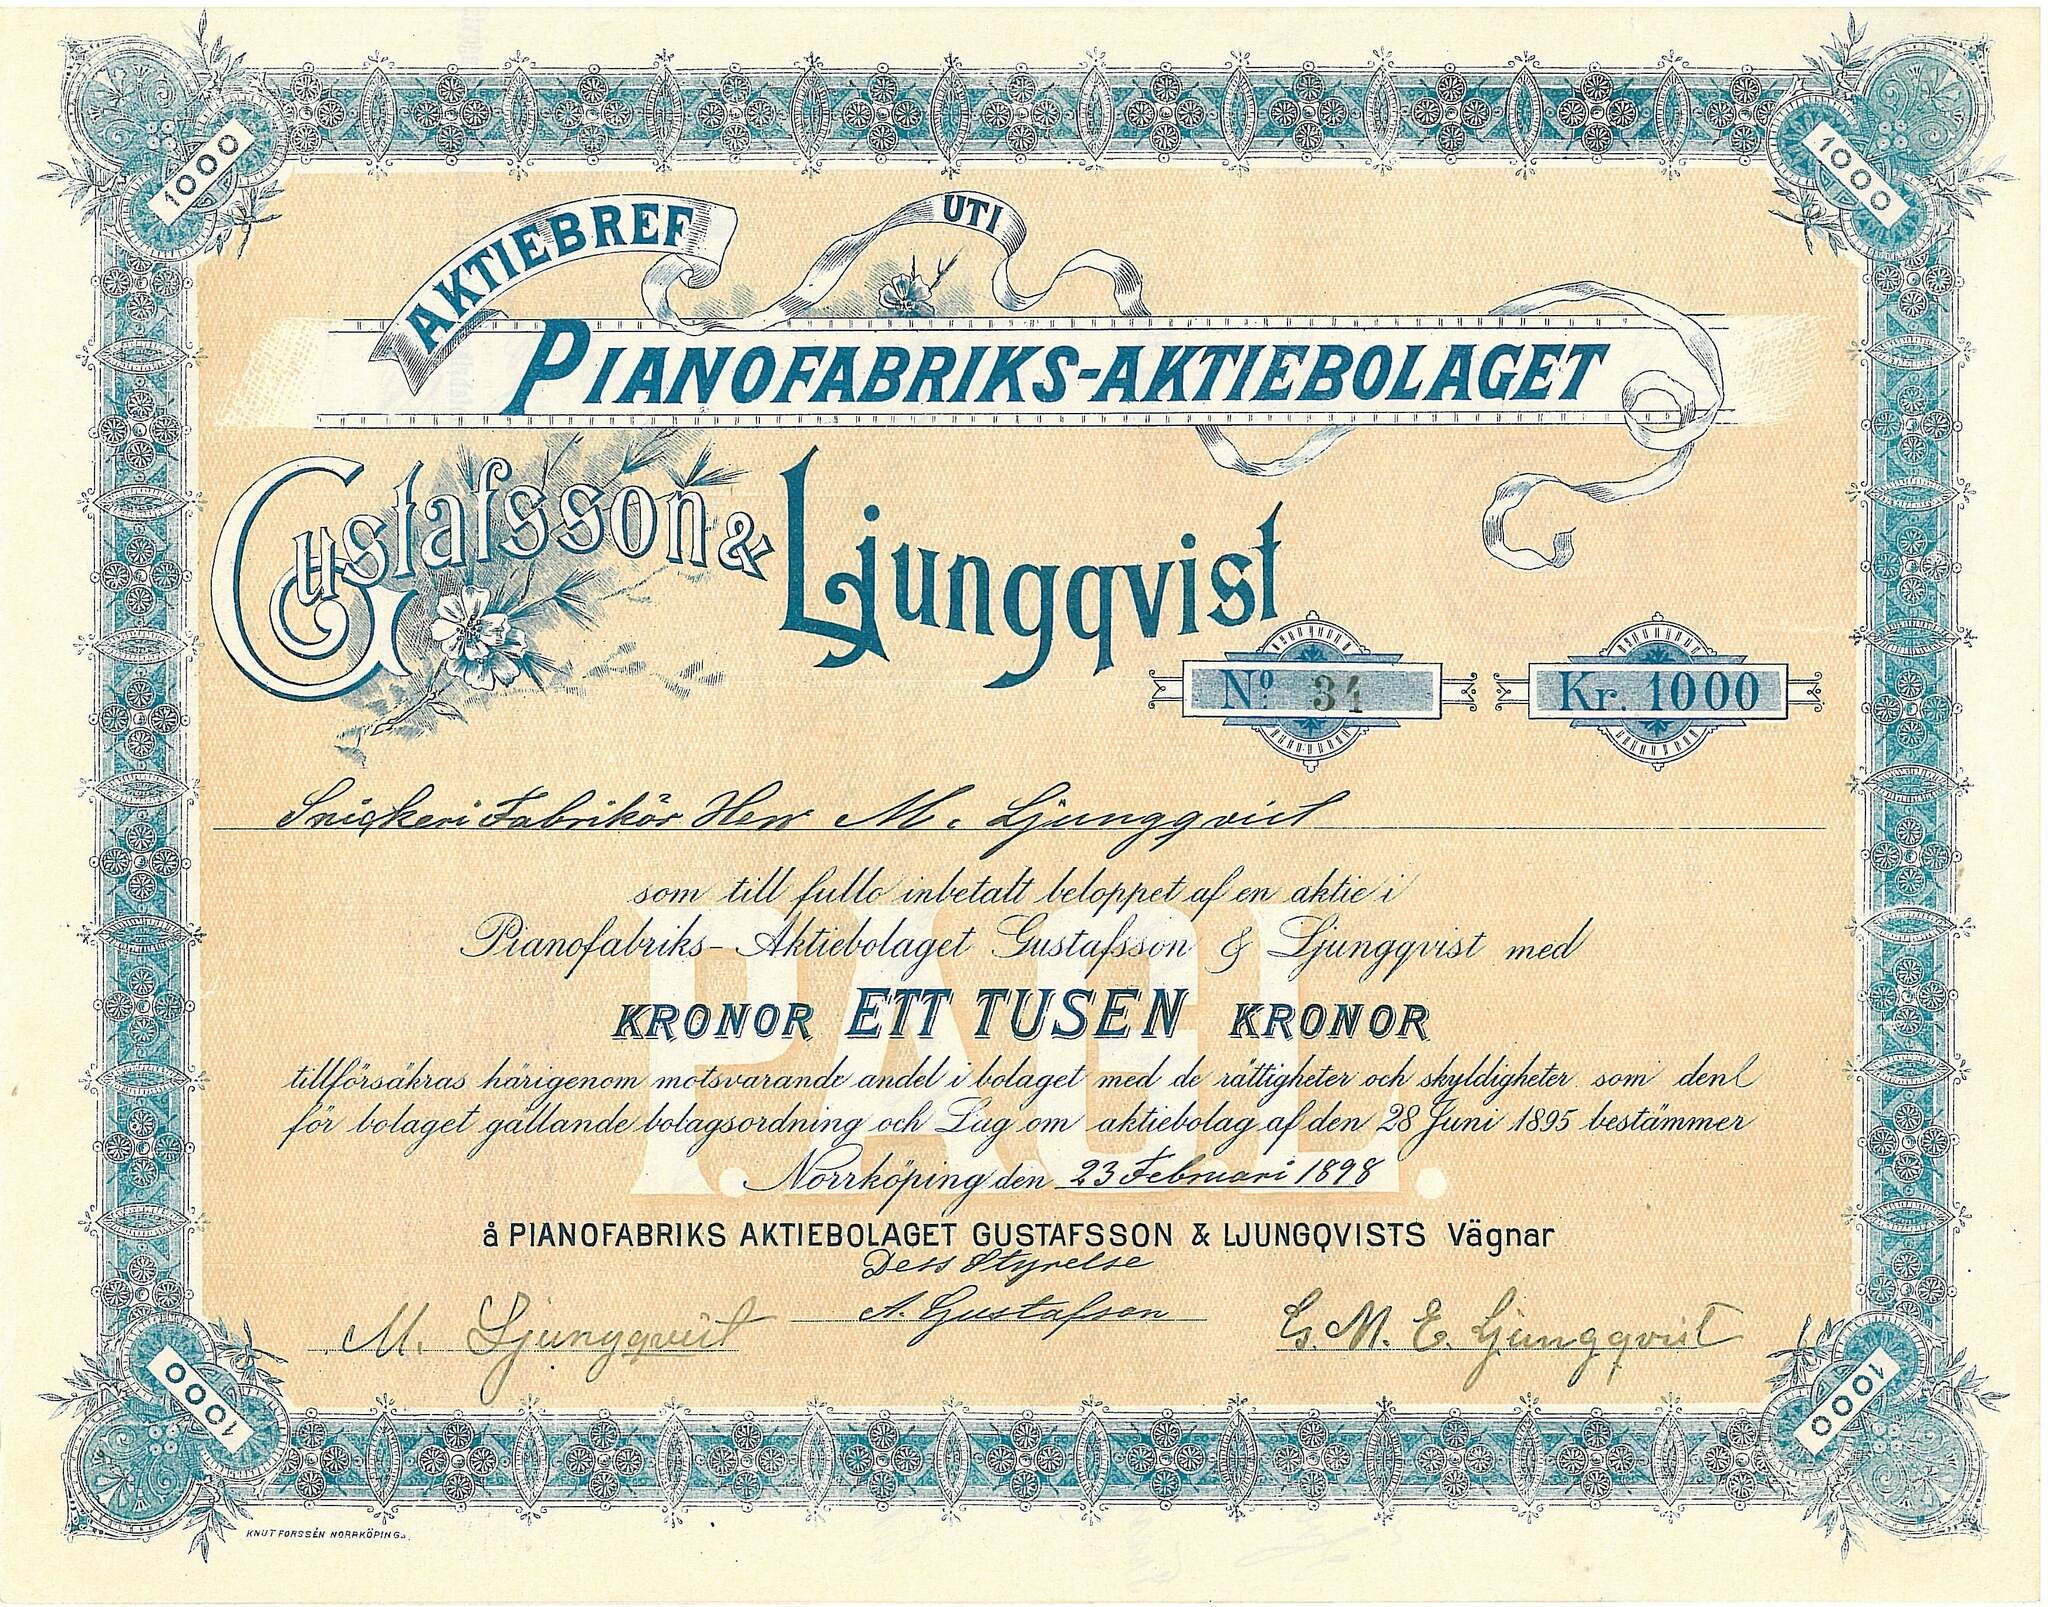 Pianofabriks AB Gustafrsson & Ljungqvist